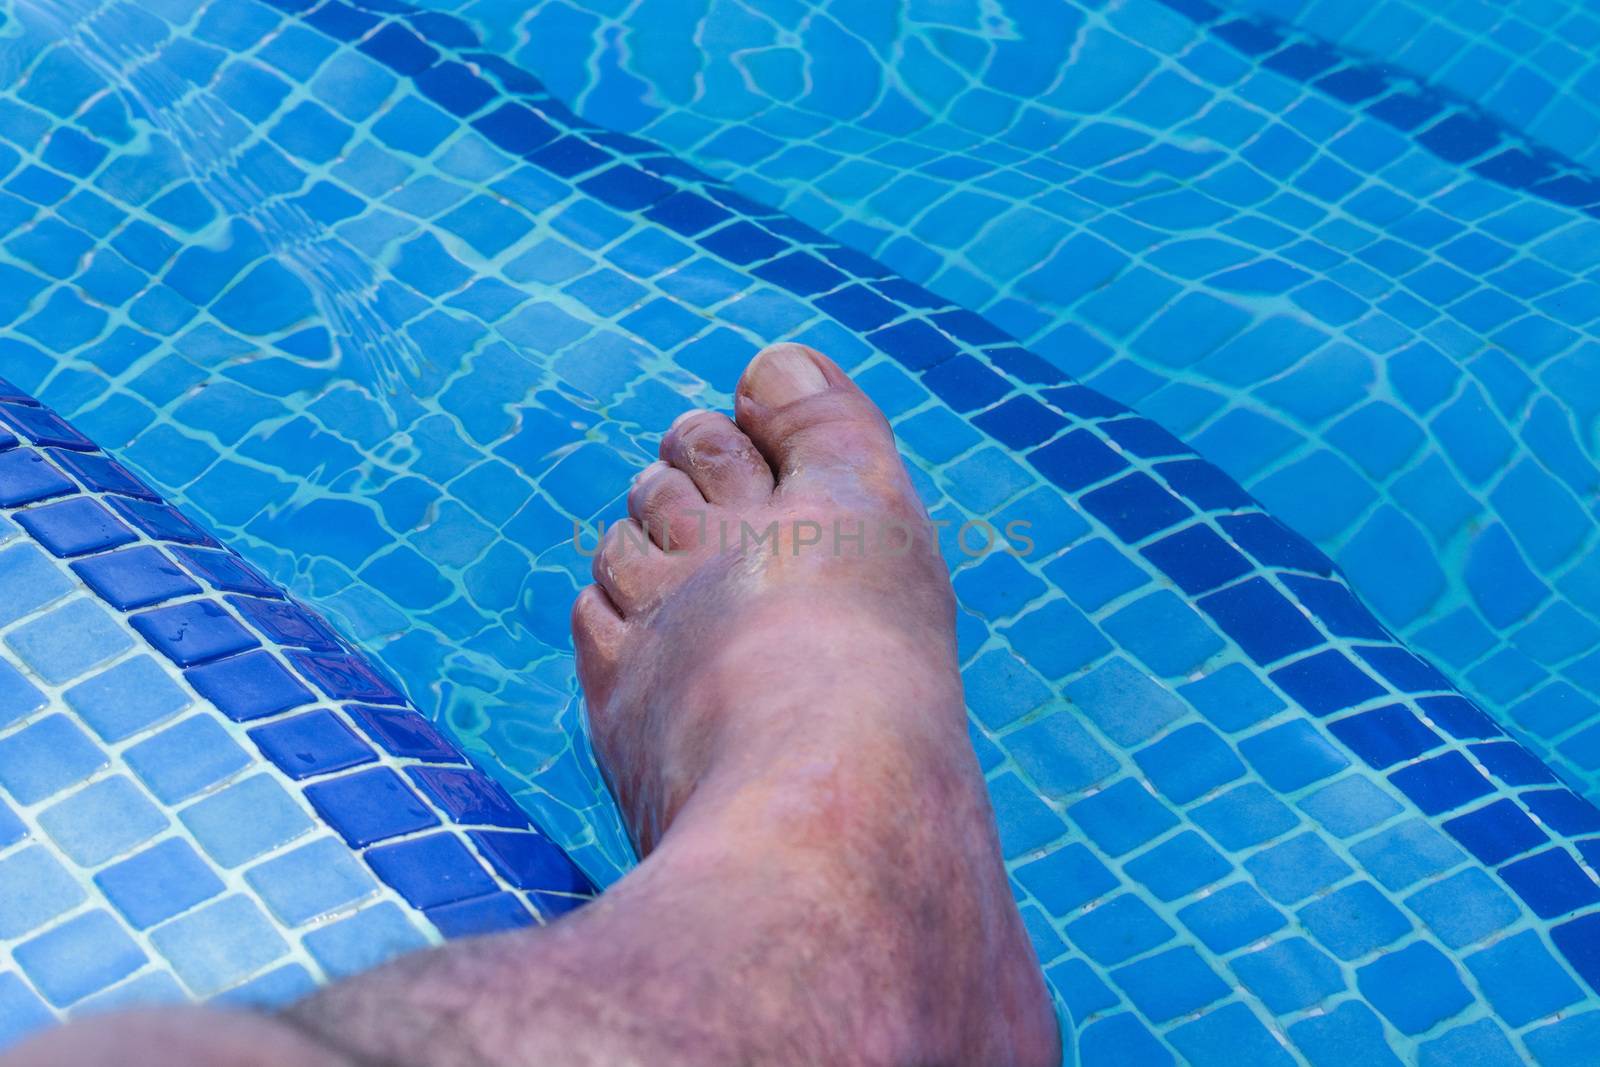 Men feet in a swimming pool         by JFsPic